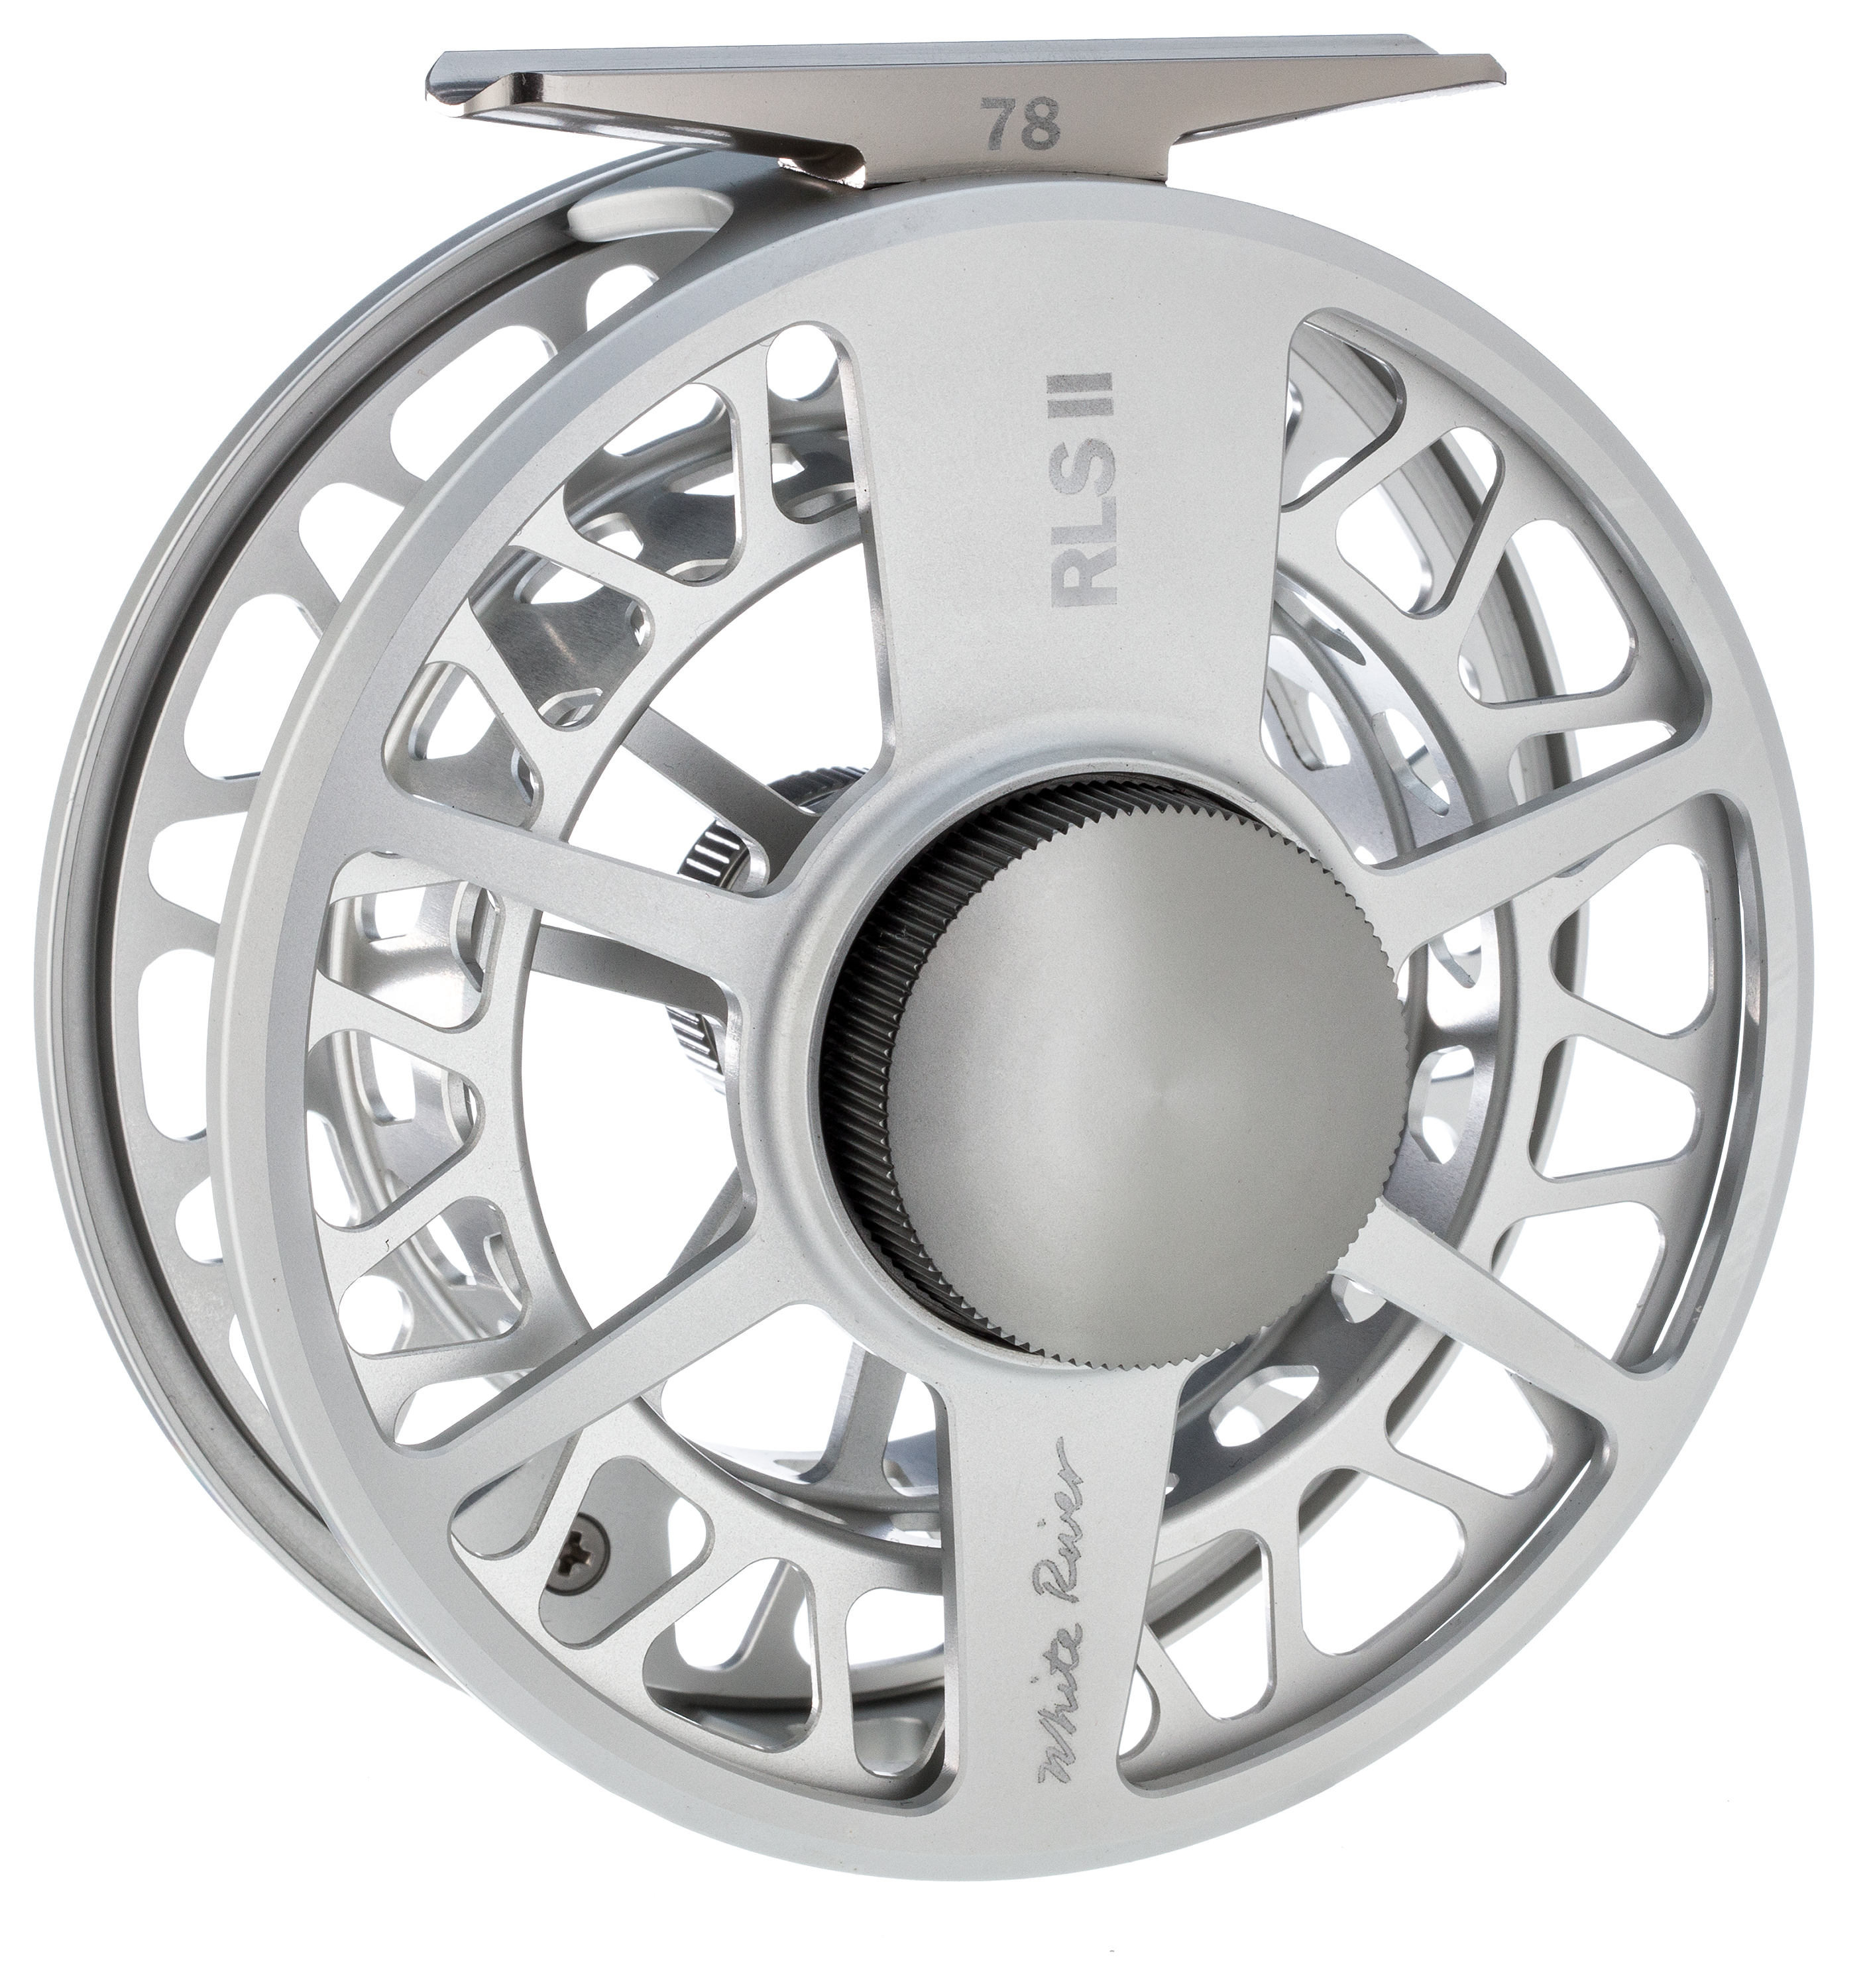 Full Metal Ultra-Light Former Ice Fishing Reels Wheel Fly Fishing Reel  Aluminum